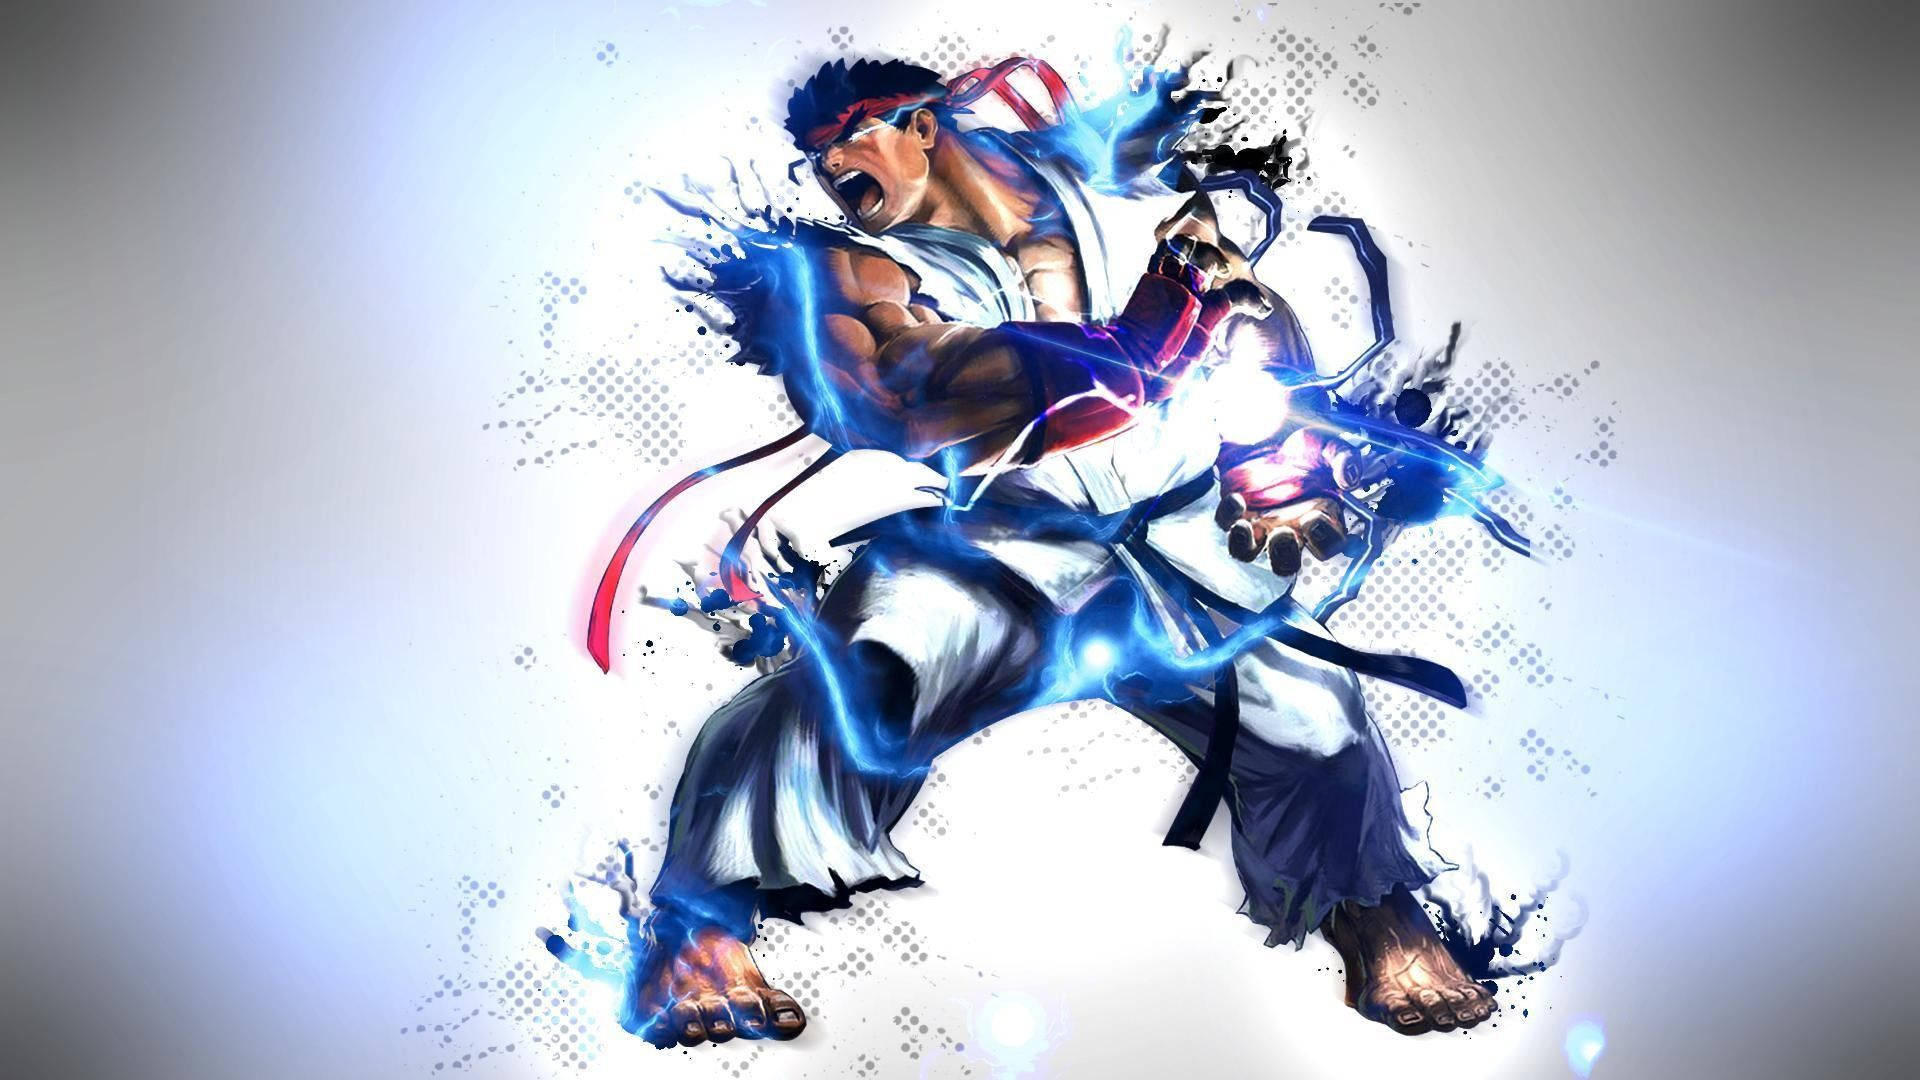 Blazing Ryu Of Street Fighter